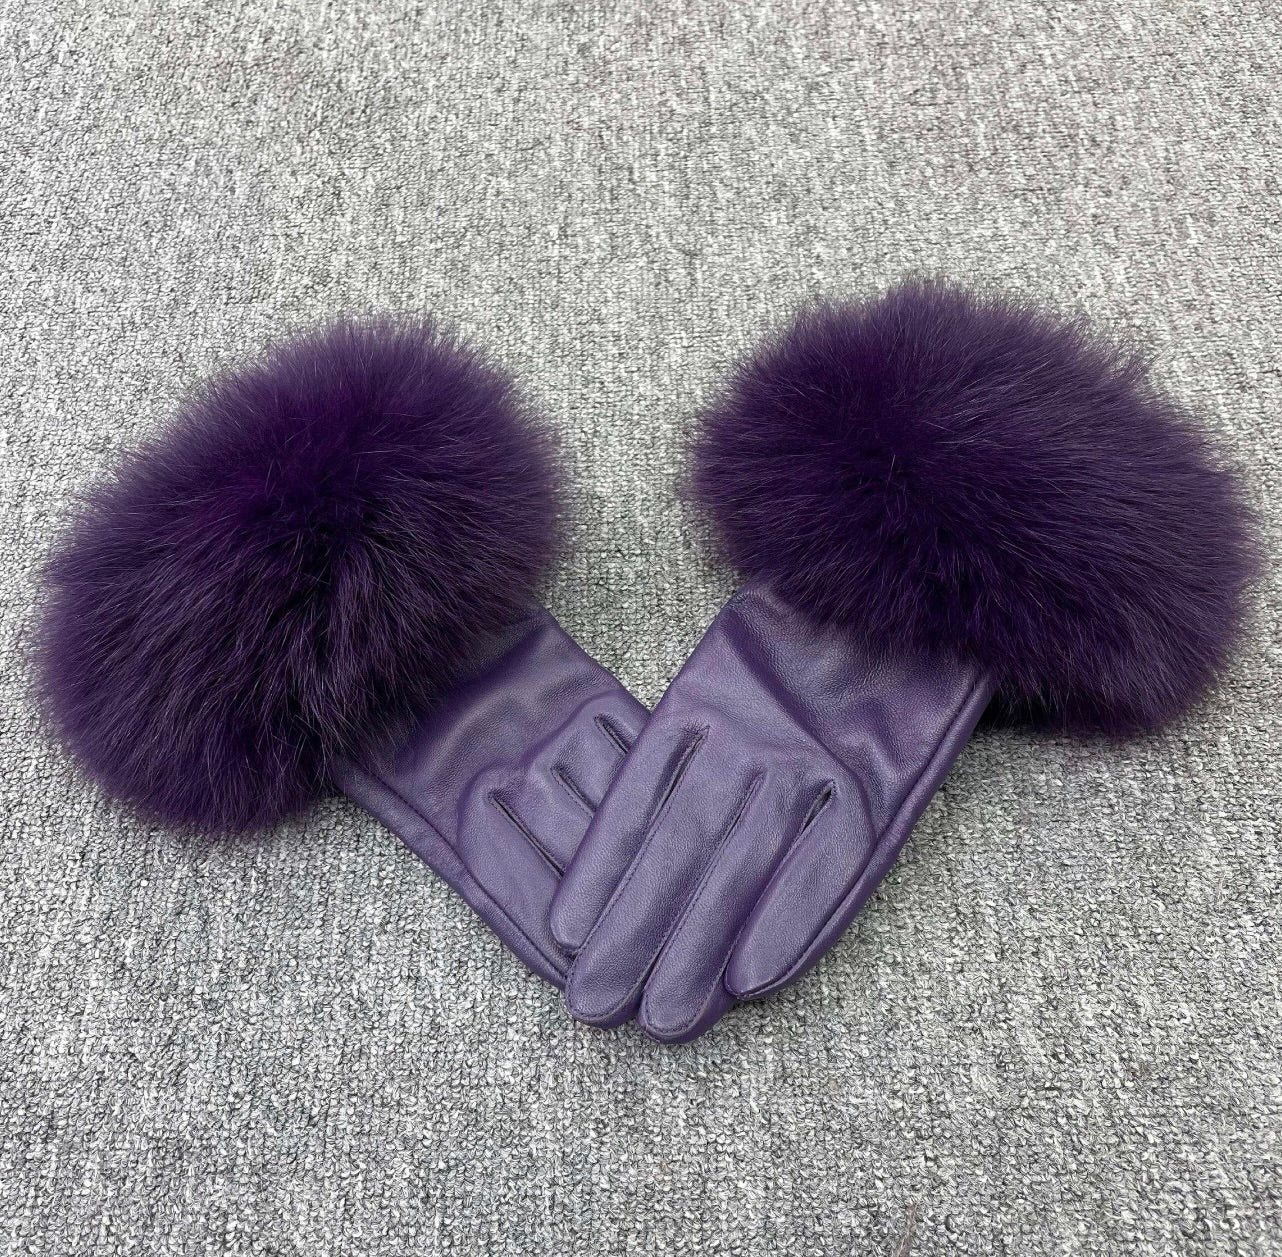 Kaamra’s Luxury leather gloves, purple